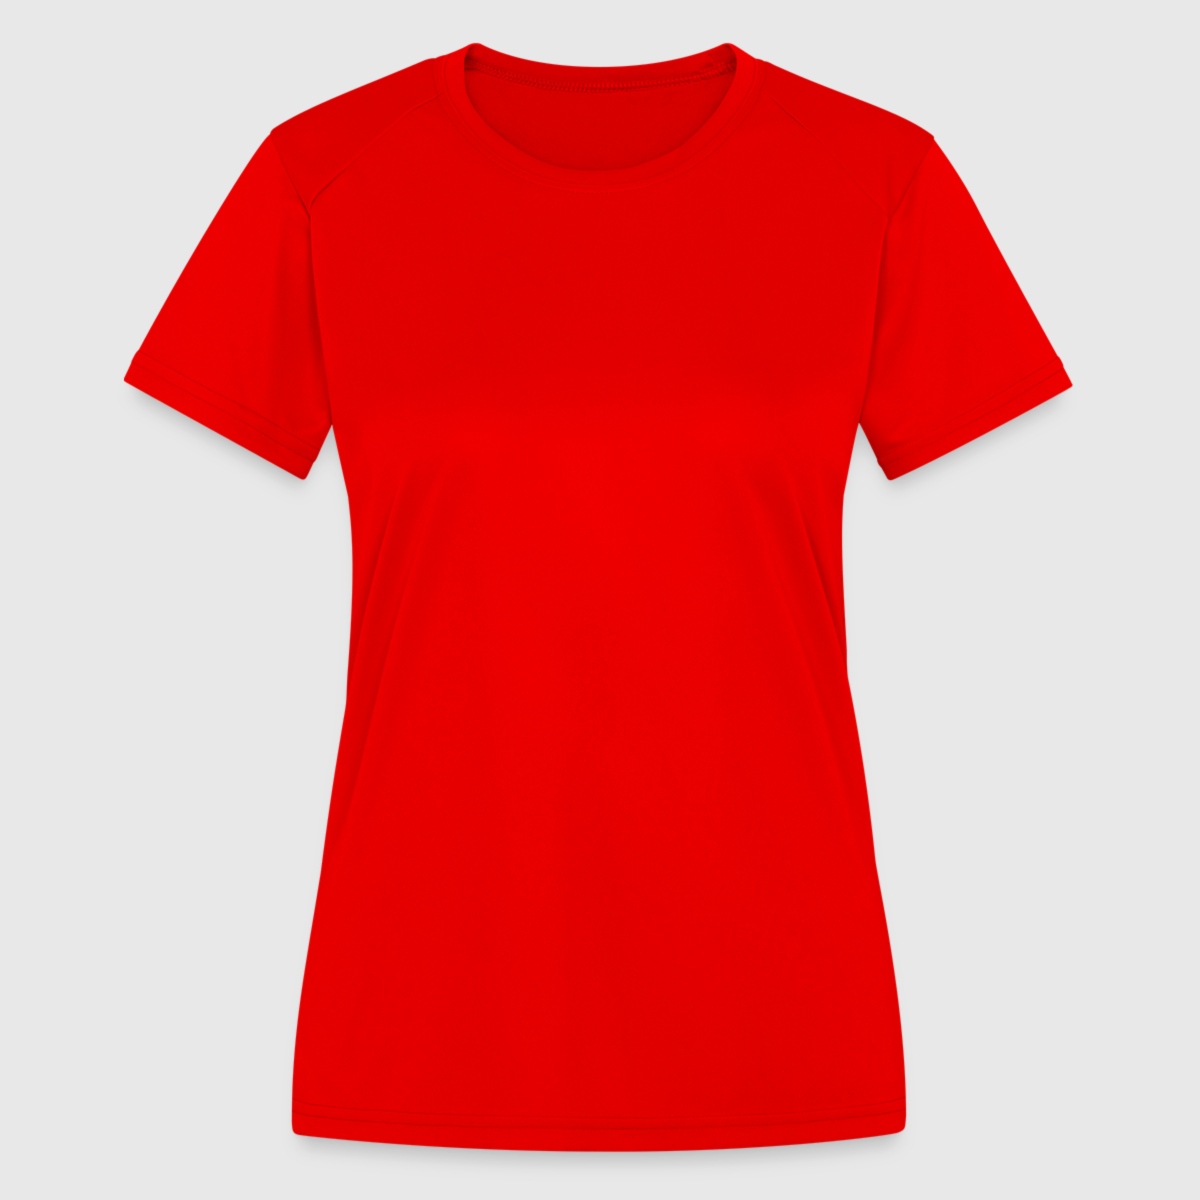 Women's Moisture Wicking Performance T-Shirt - Front